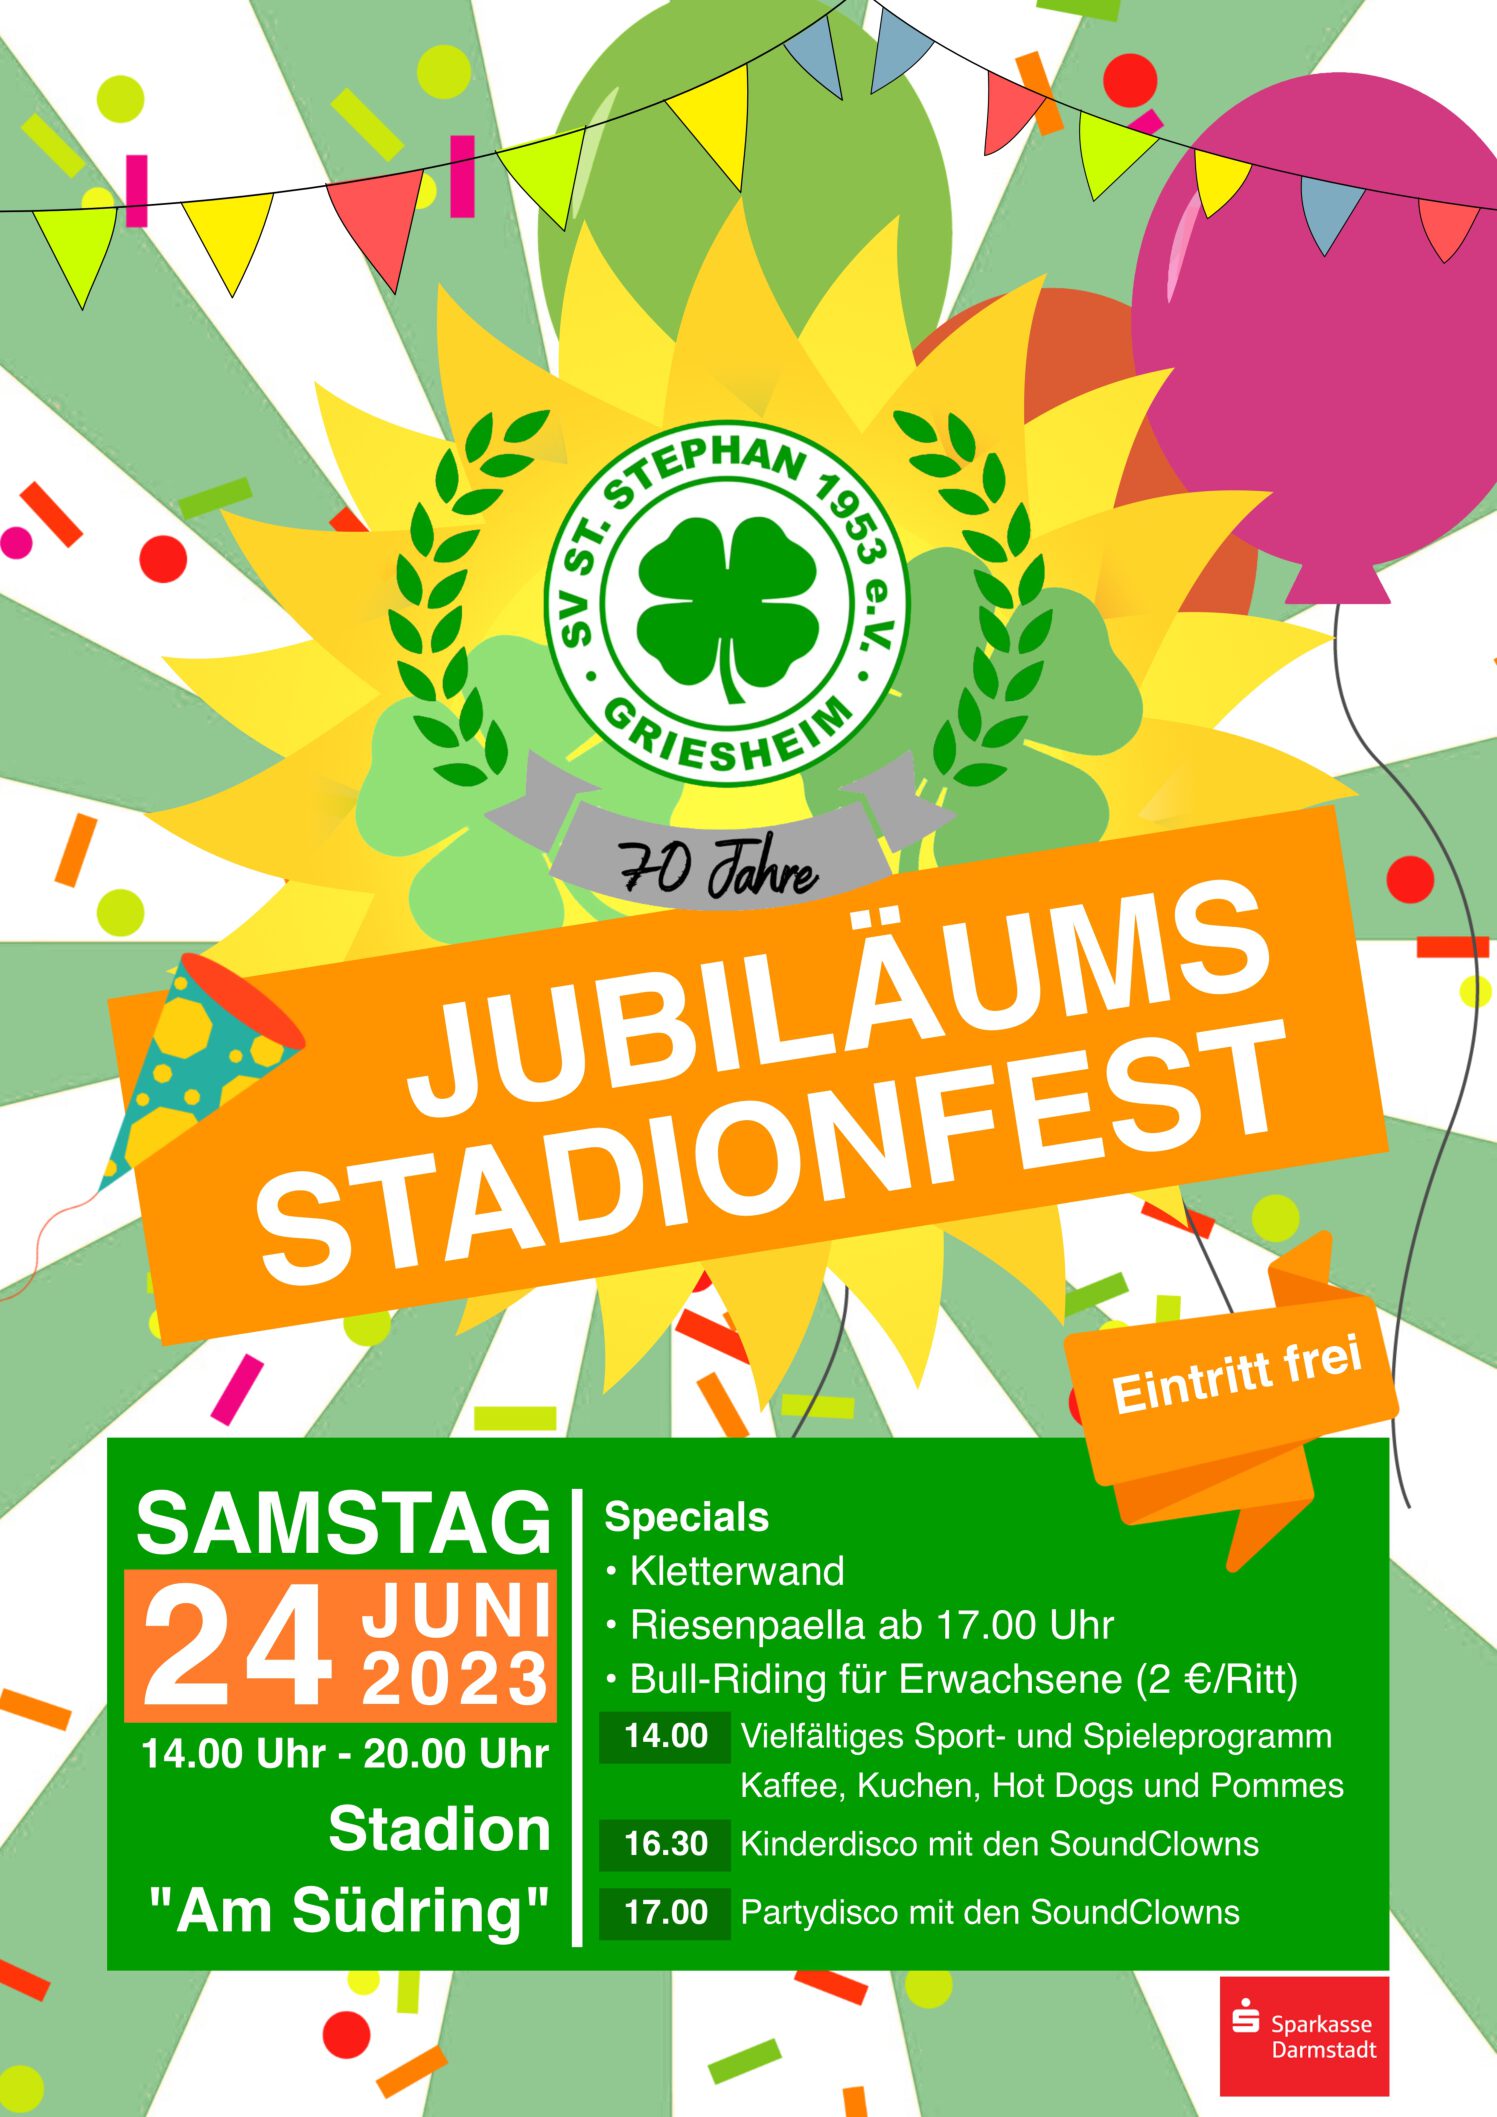 Stadionfest - St. Stephan Griesheim